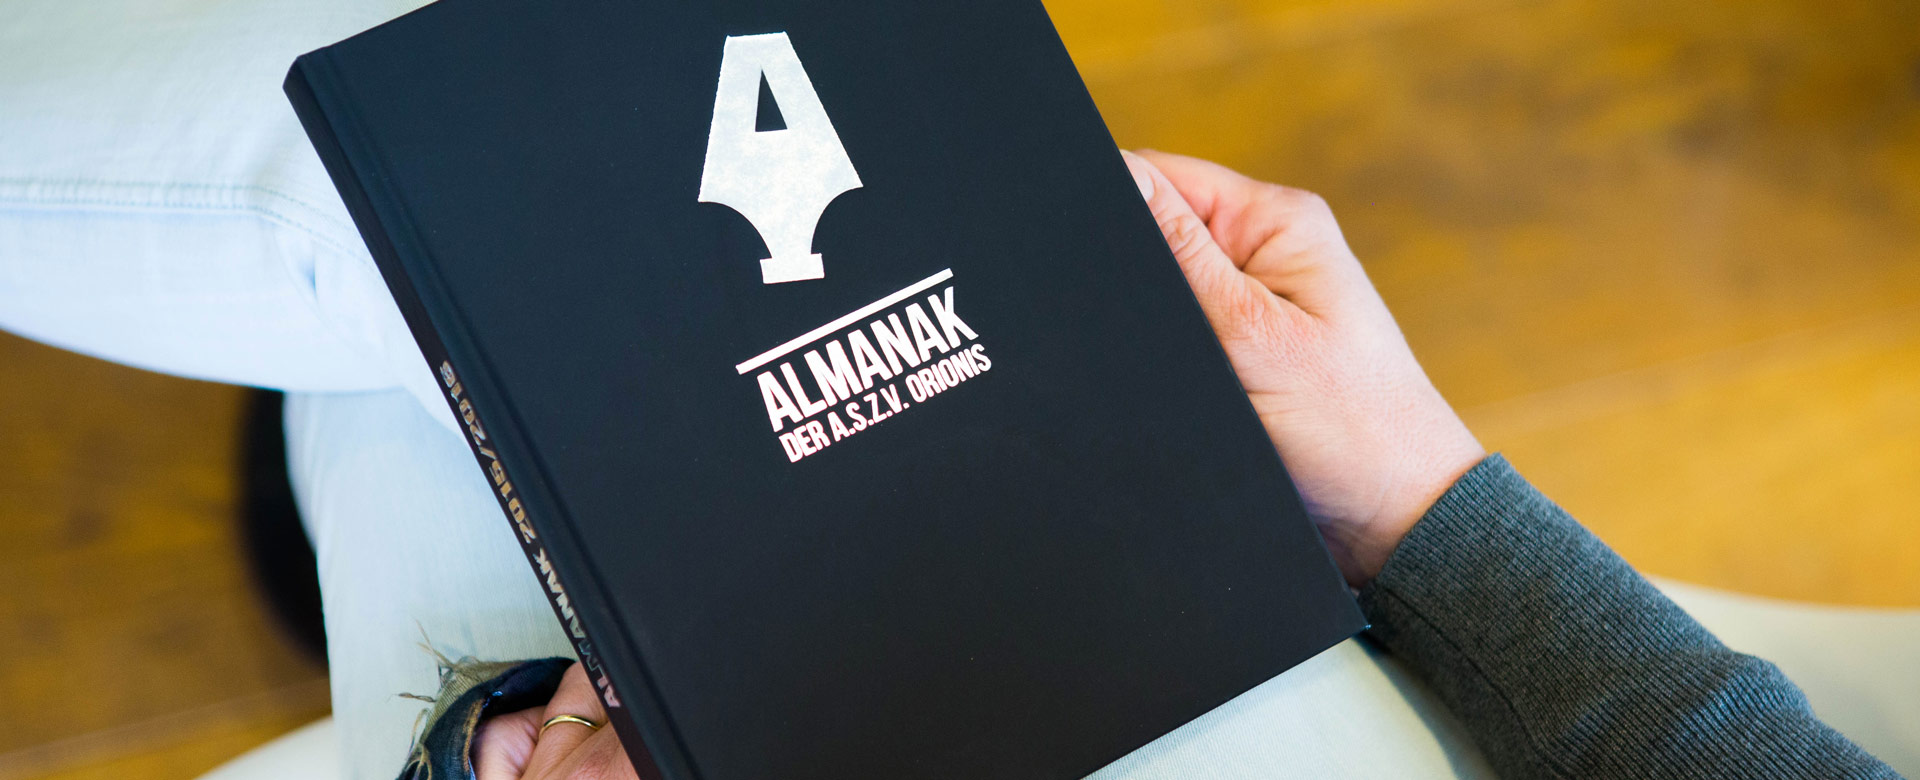 PerfectBook - Almanak